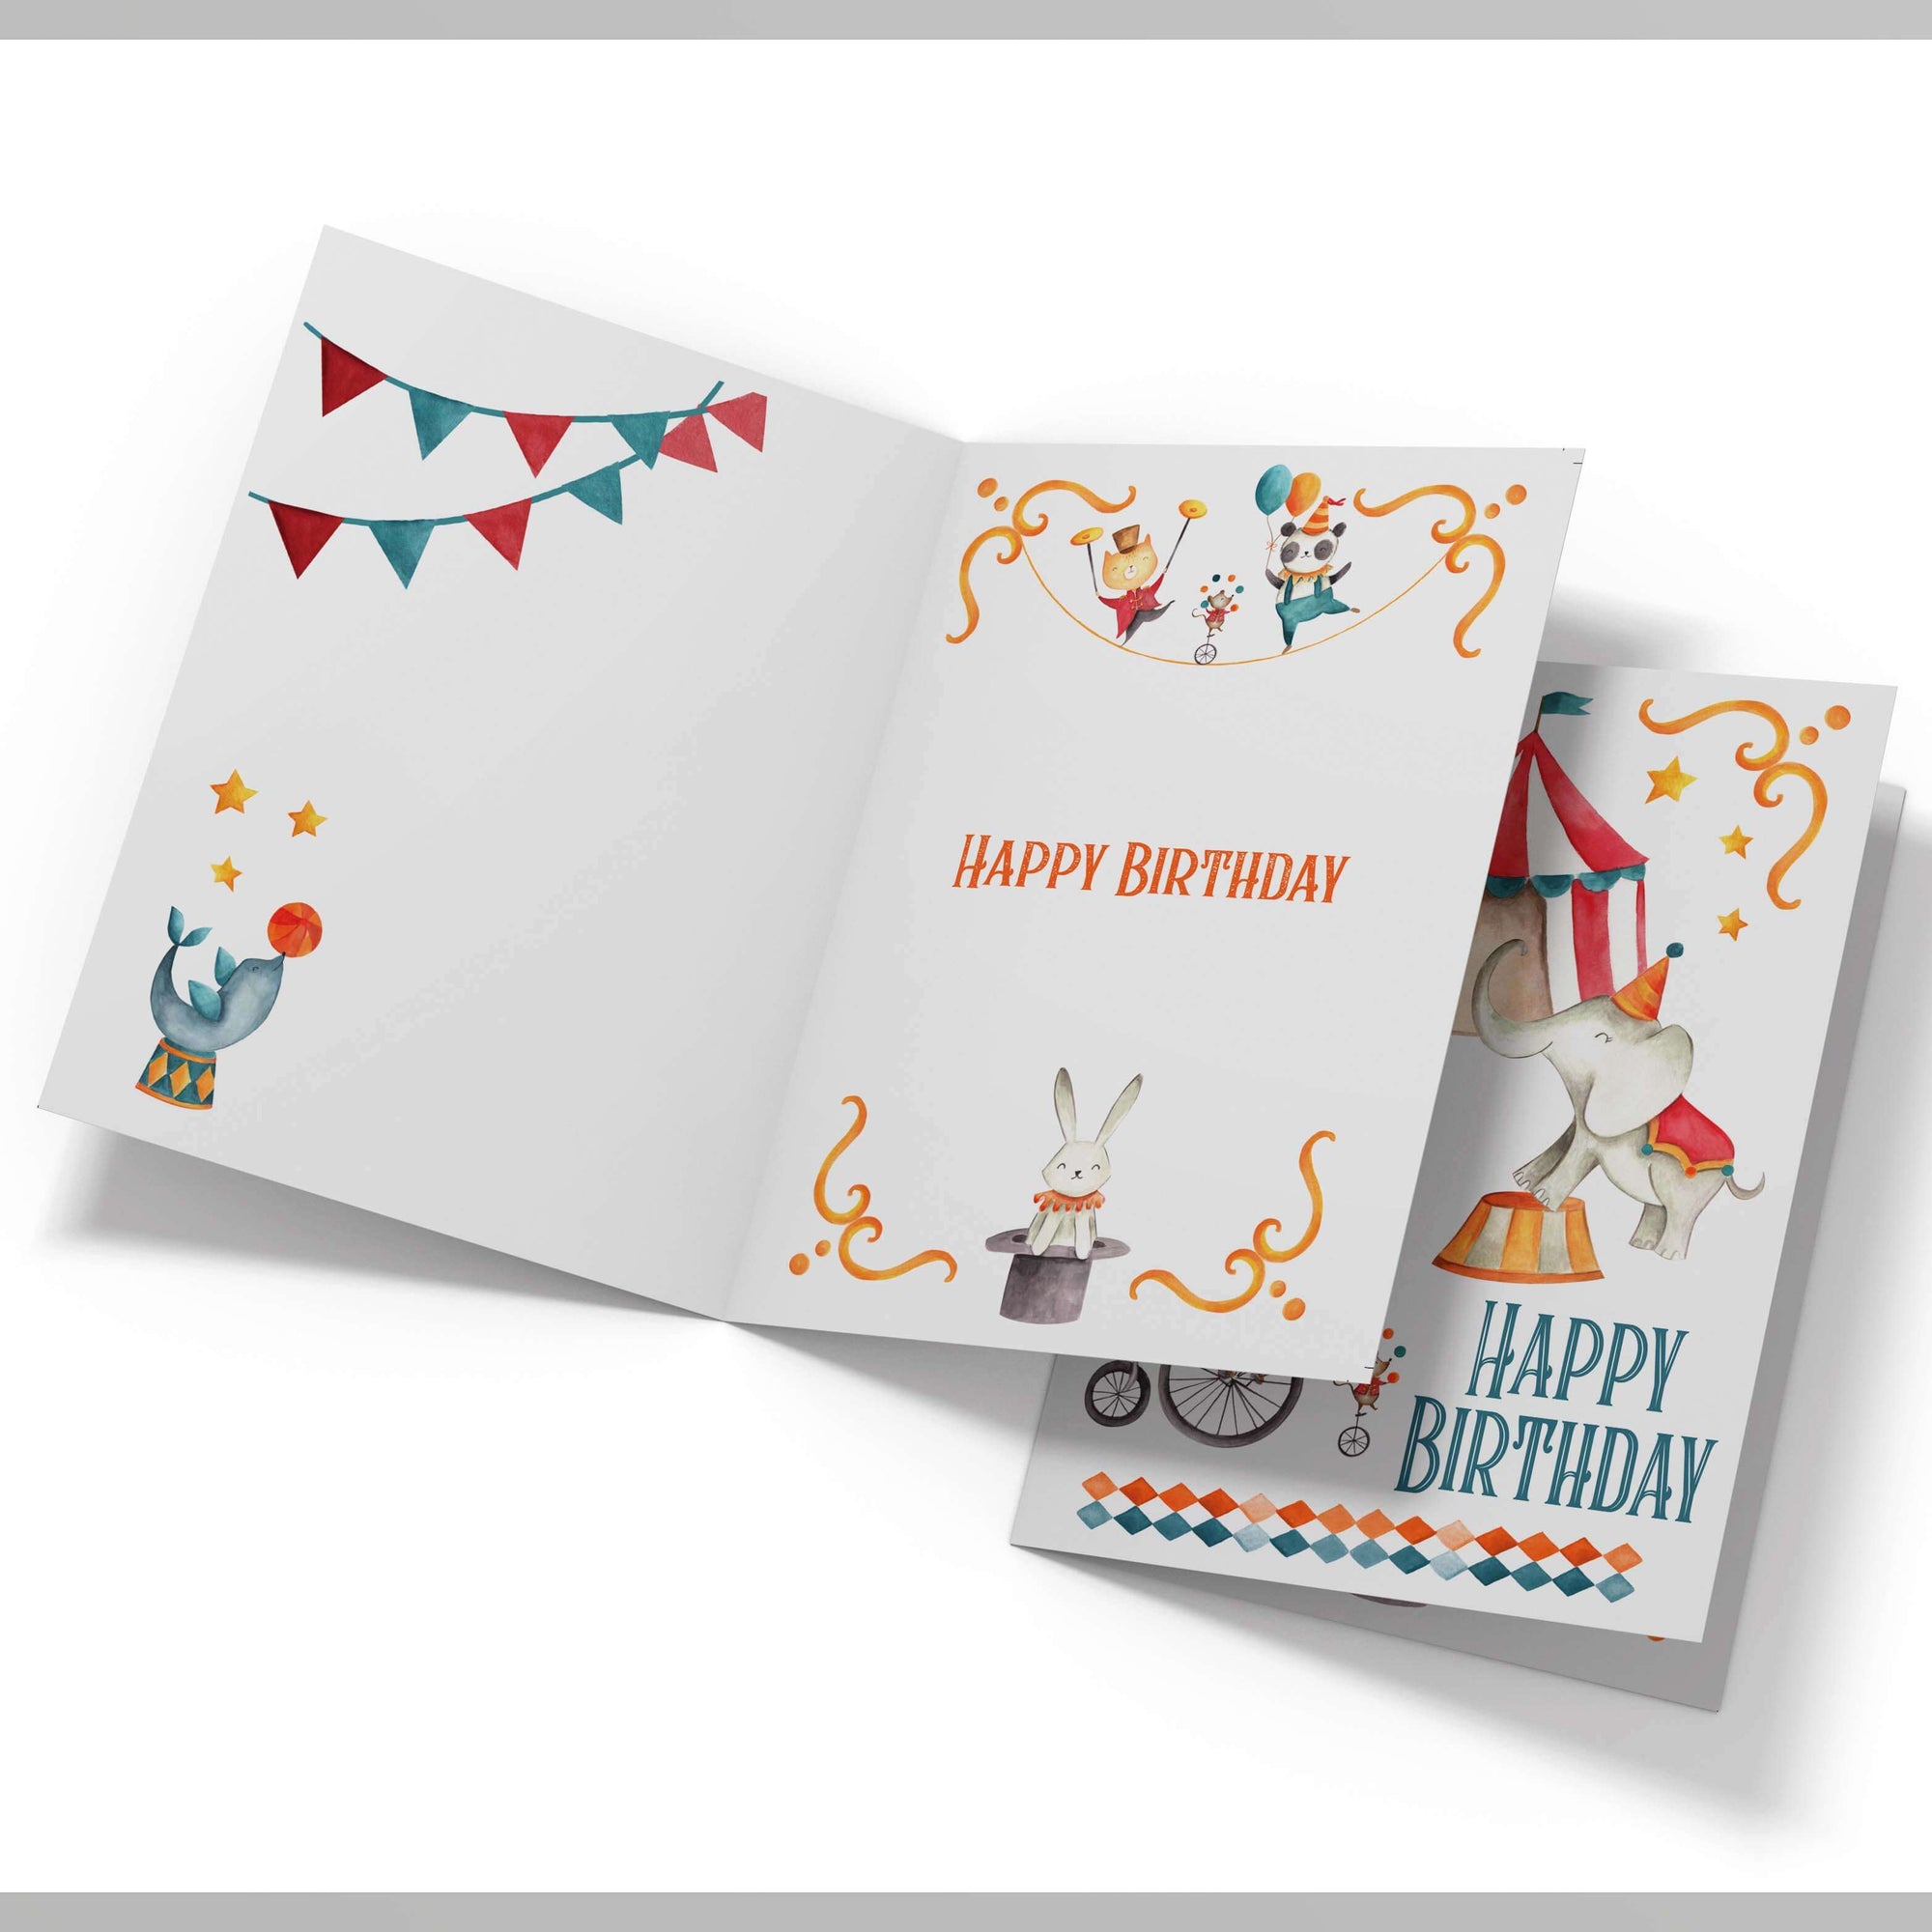 Le Cirque Magnifique Circus Birthday Card Greetings Card Mustard and Gray Ltd Shropshire UK